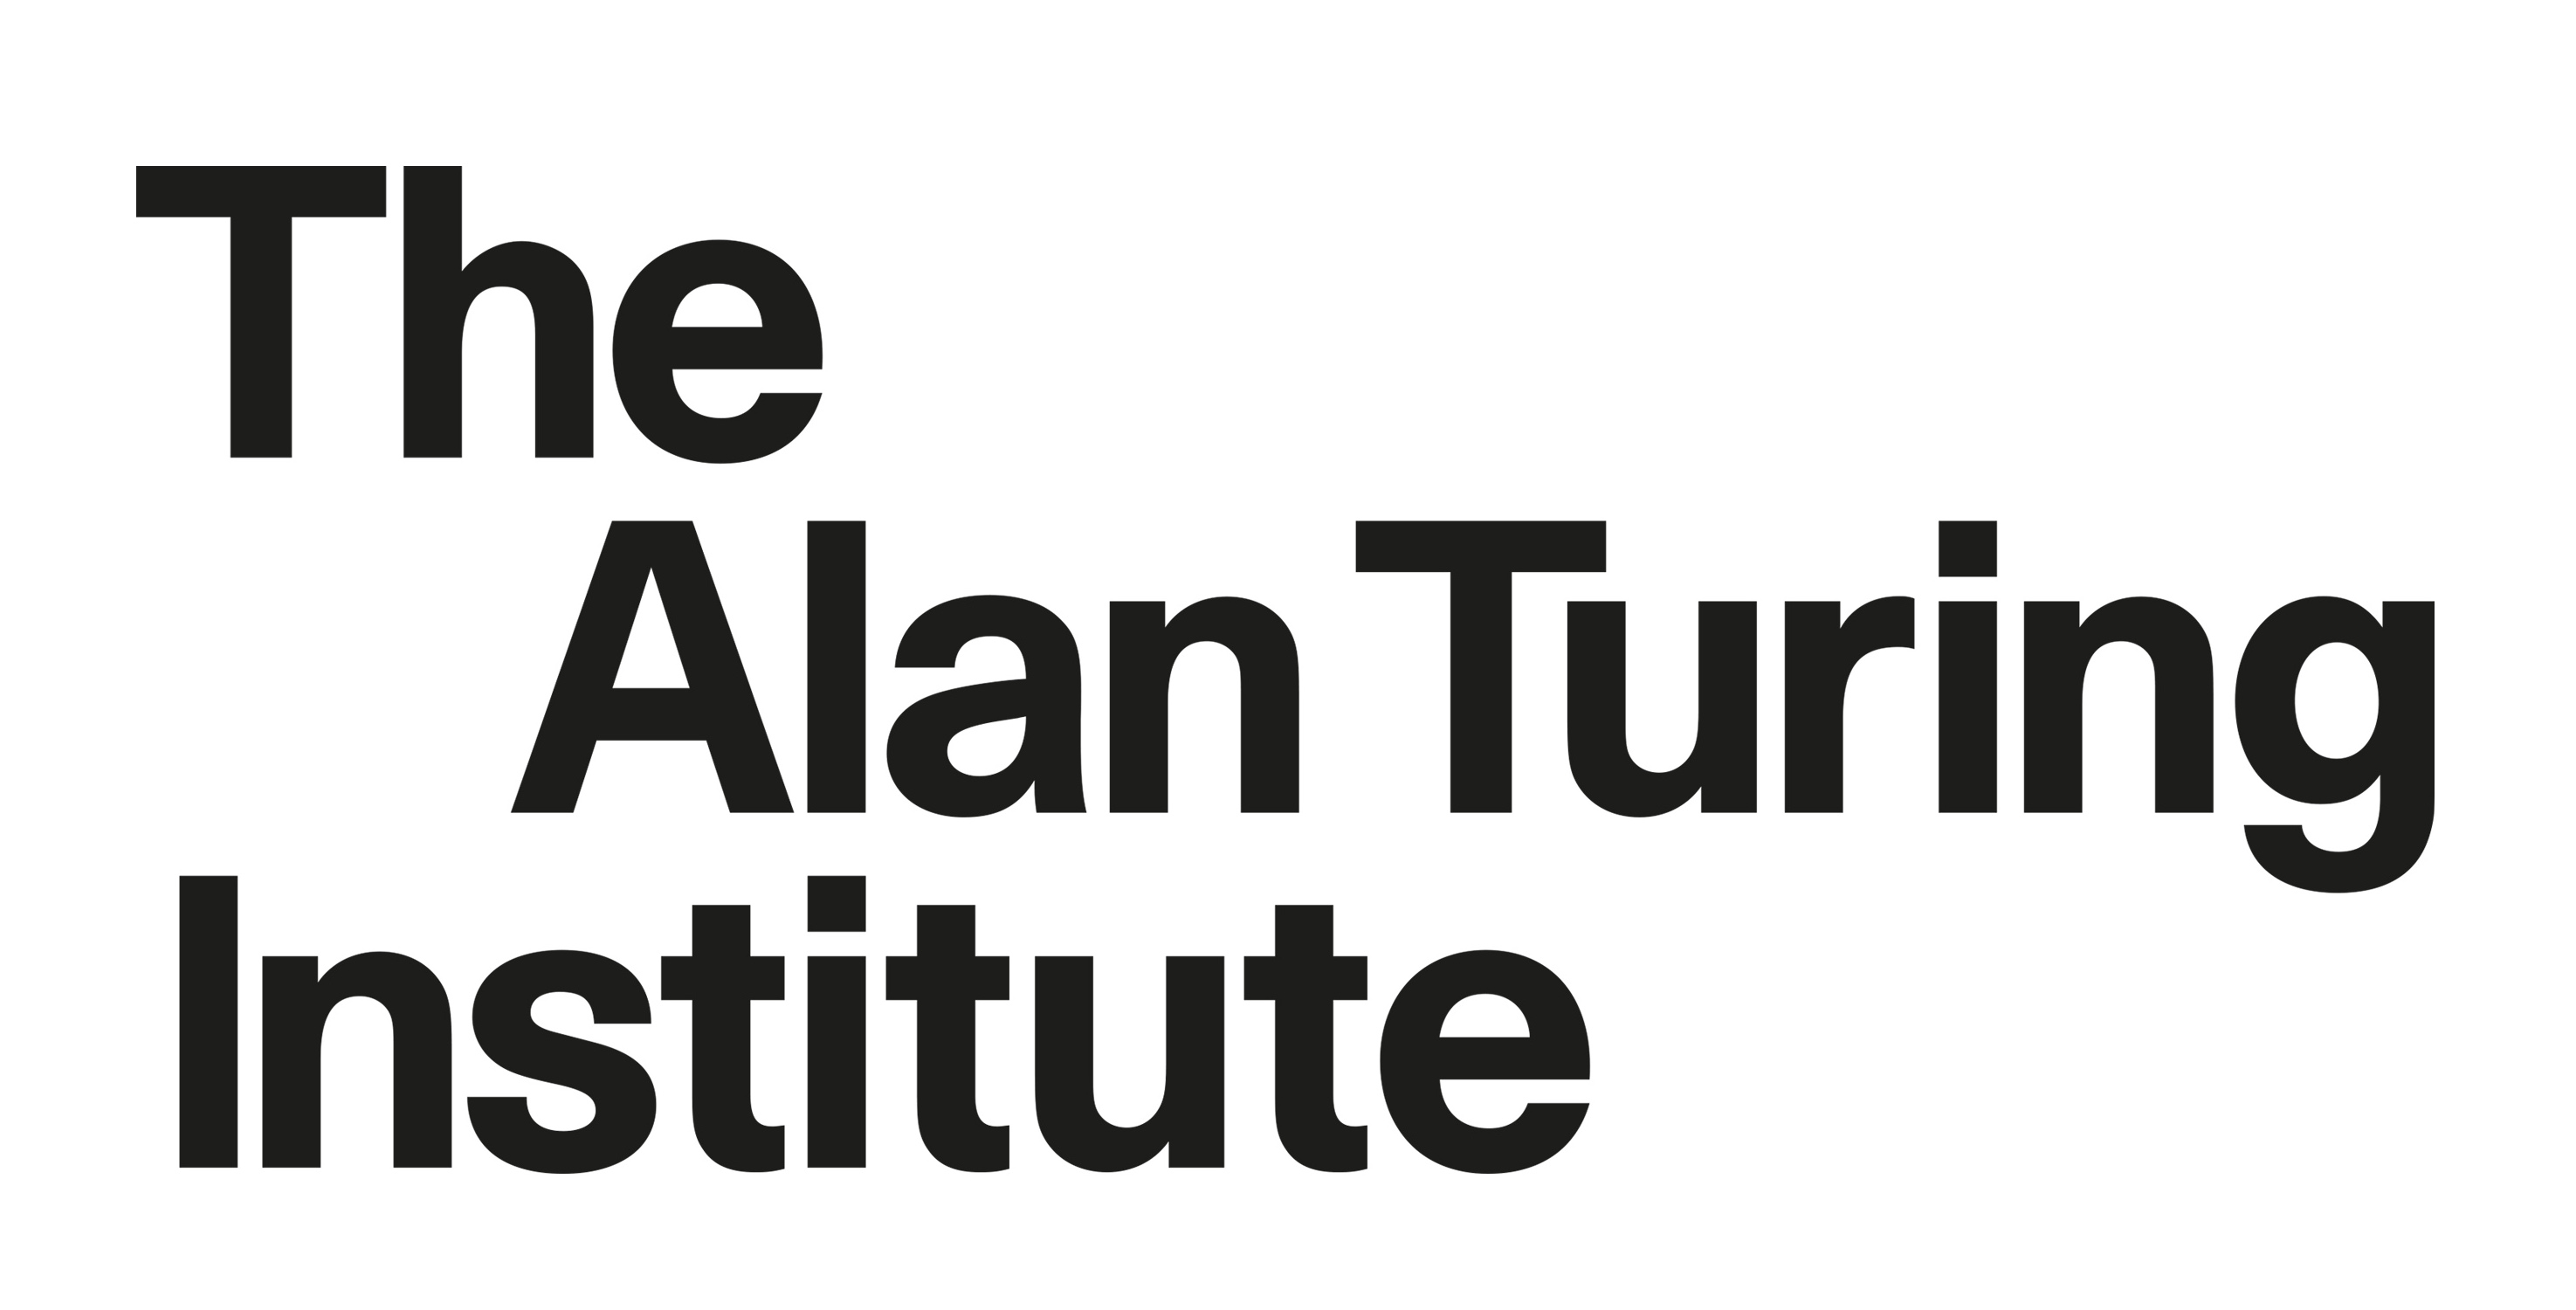 Alan Turing Institute logo